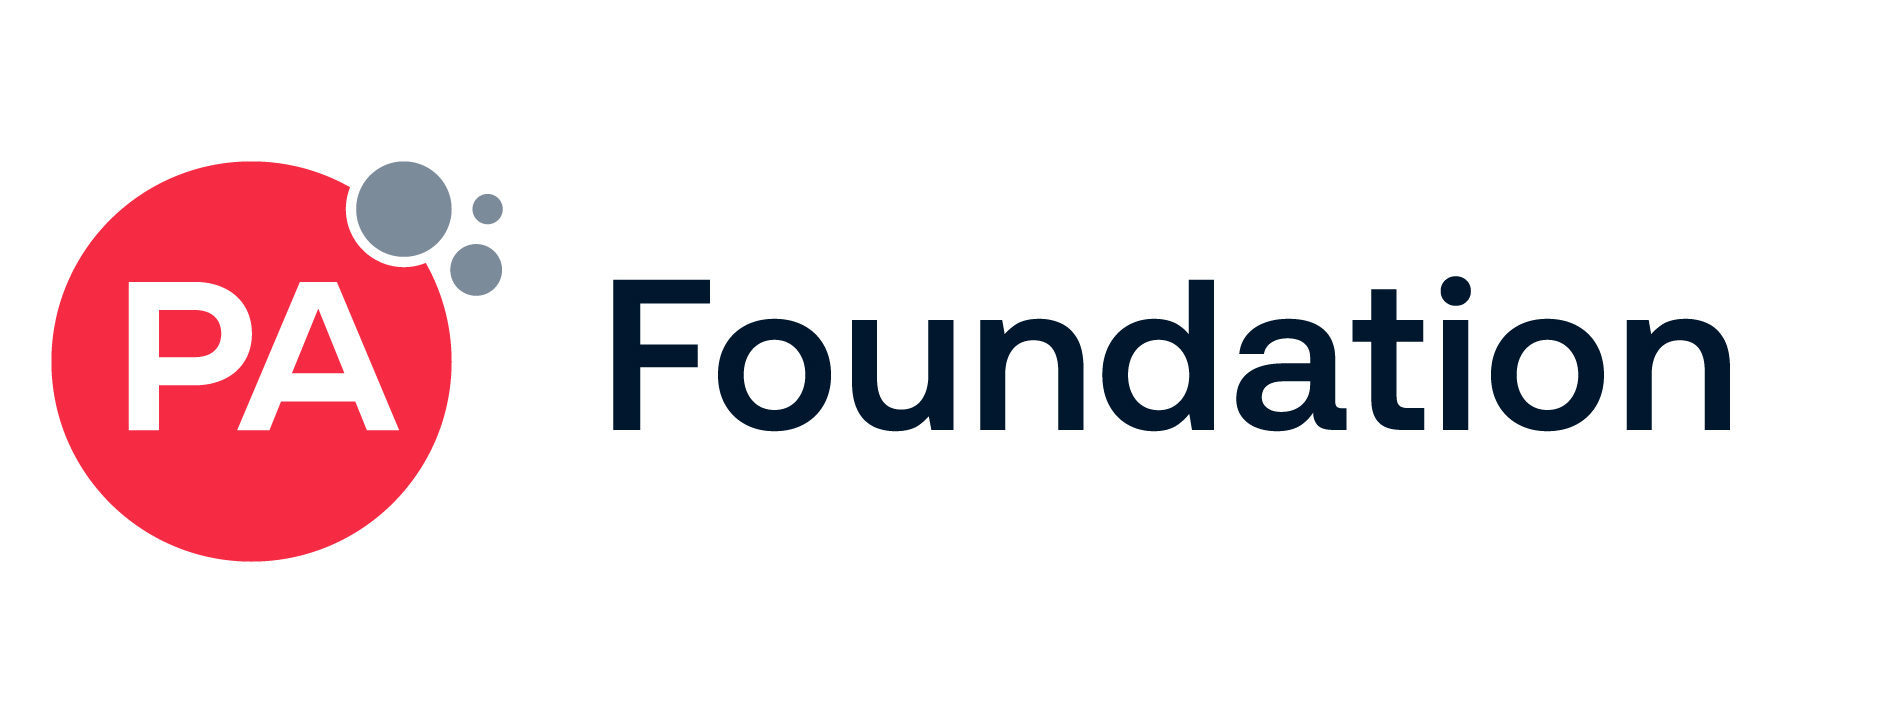 PA Foundation